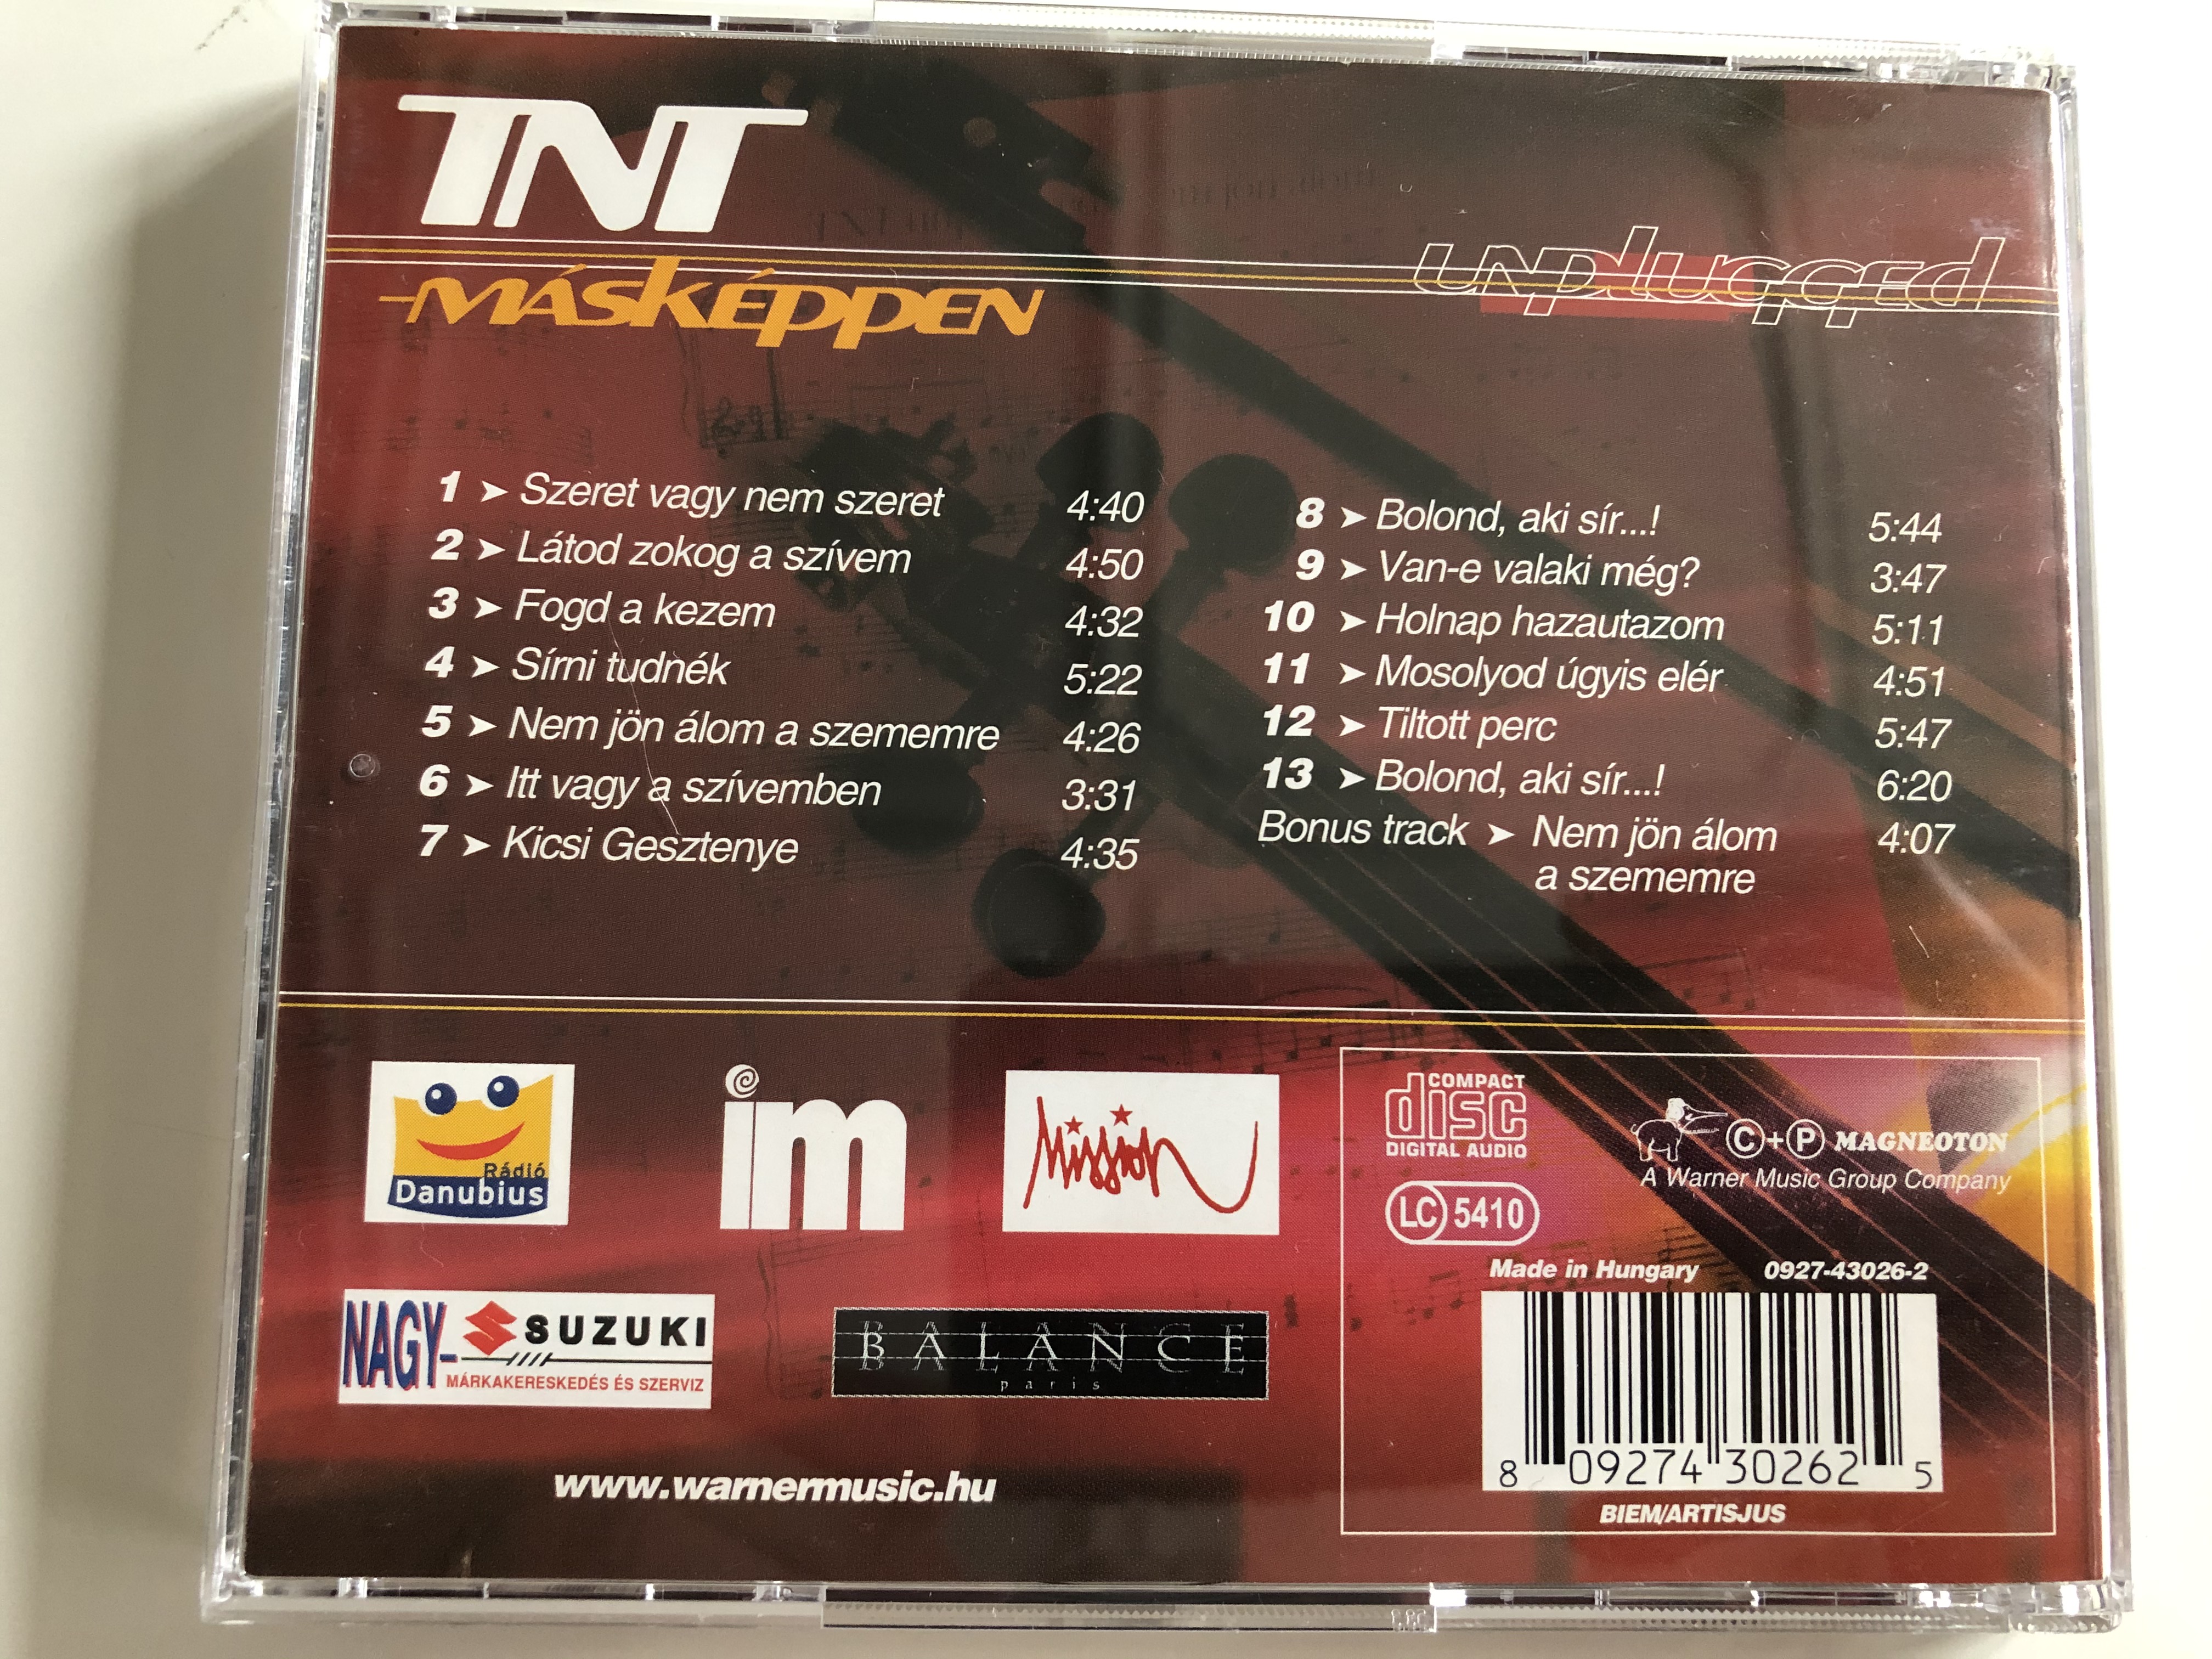 tnt-m-sk-ppen-unplugged-magneoton-audio-cd-2001-0927-43026-2-17-.jpg